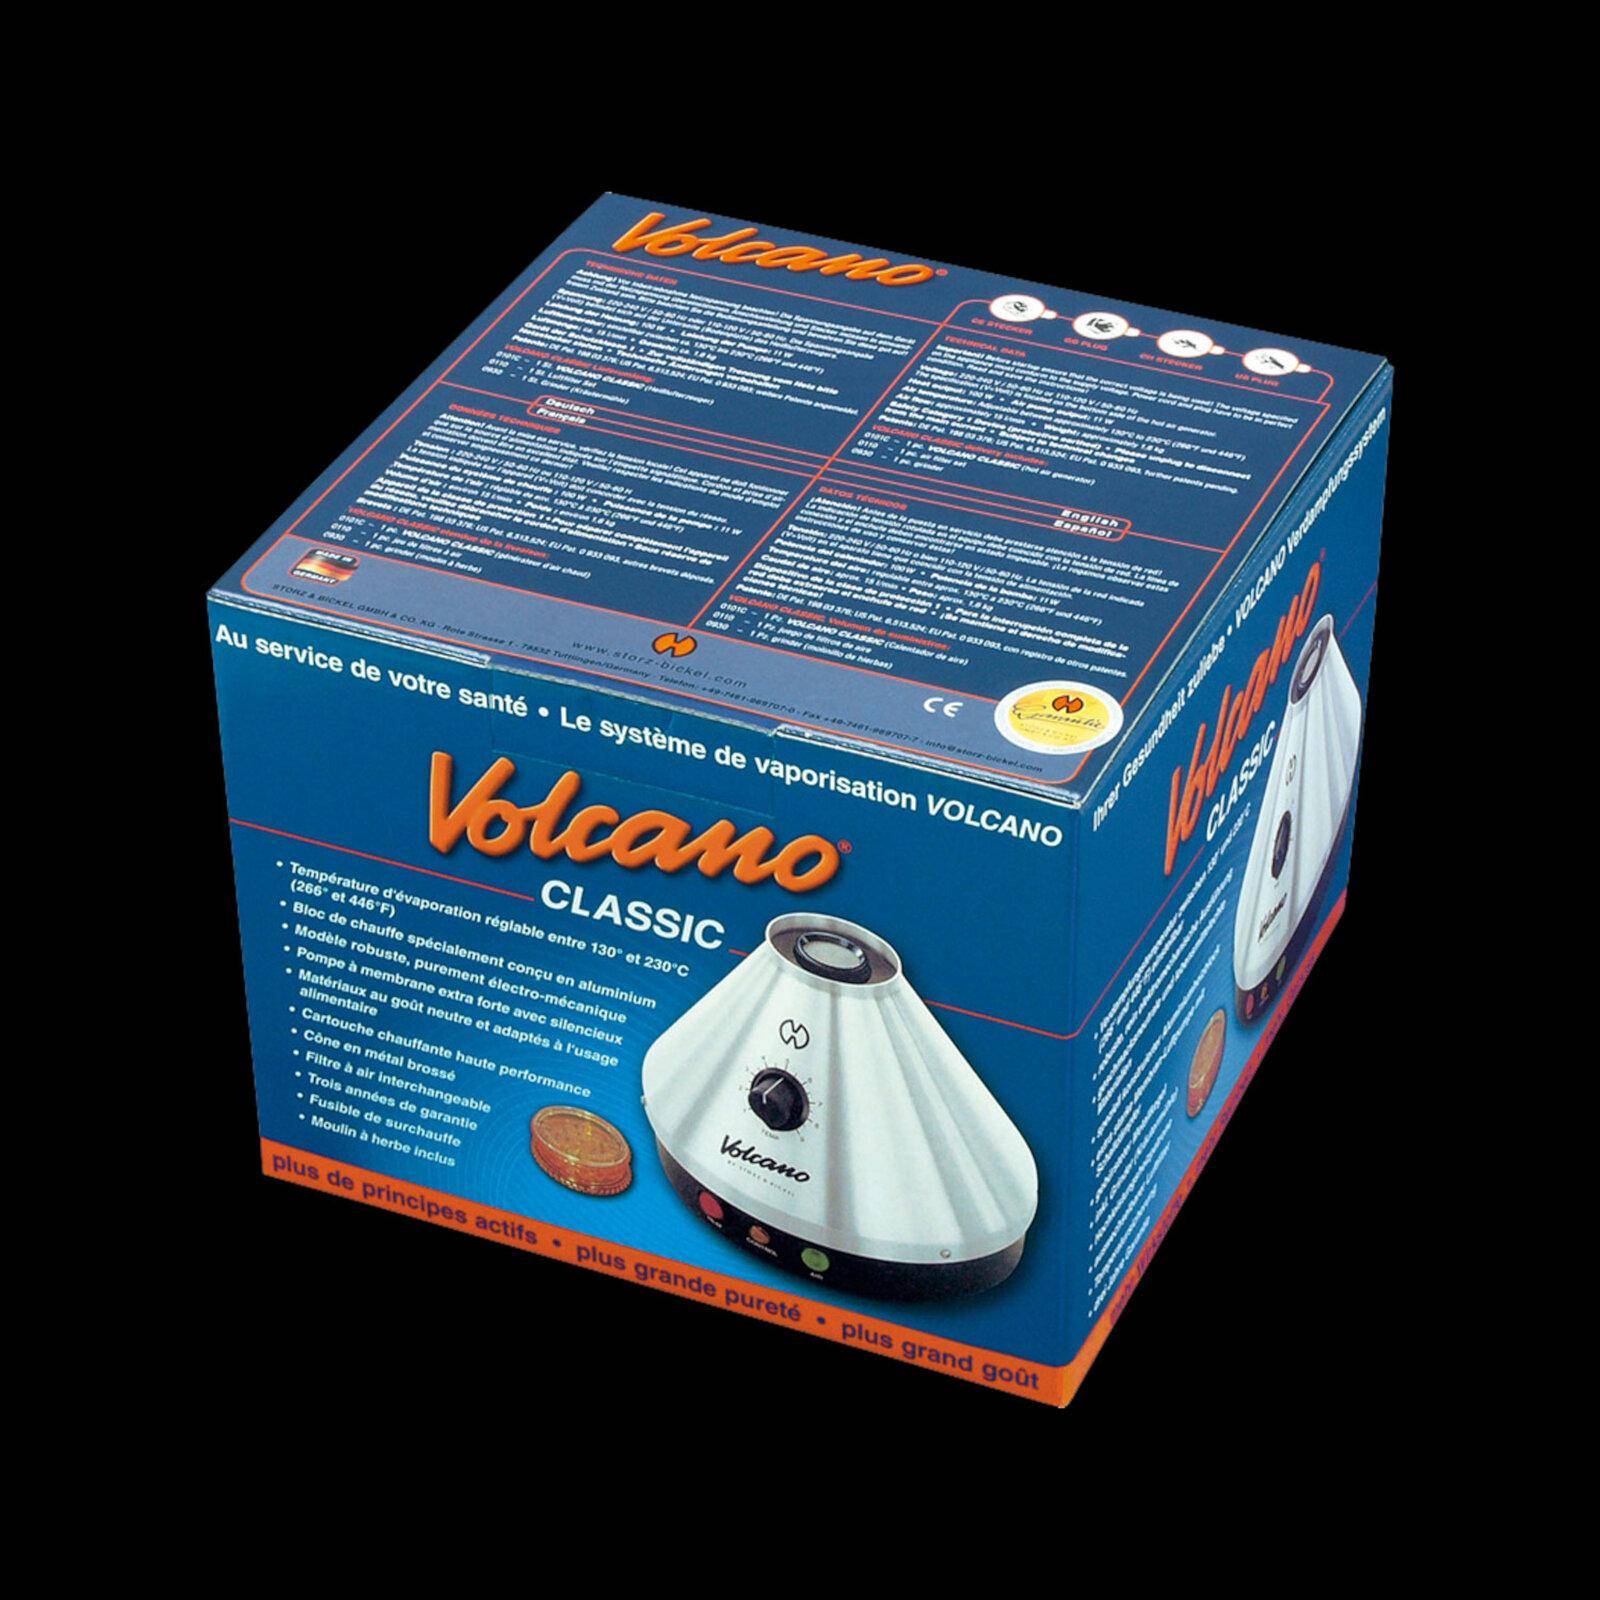 Volcano Classic mit Easy und Solid Valve Set